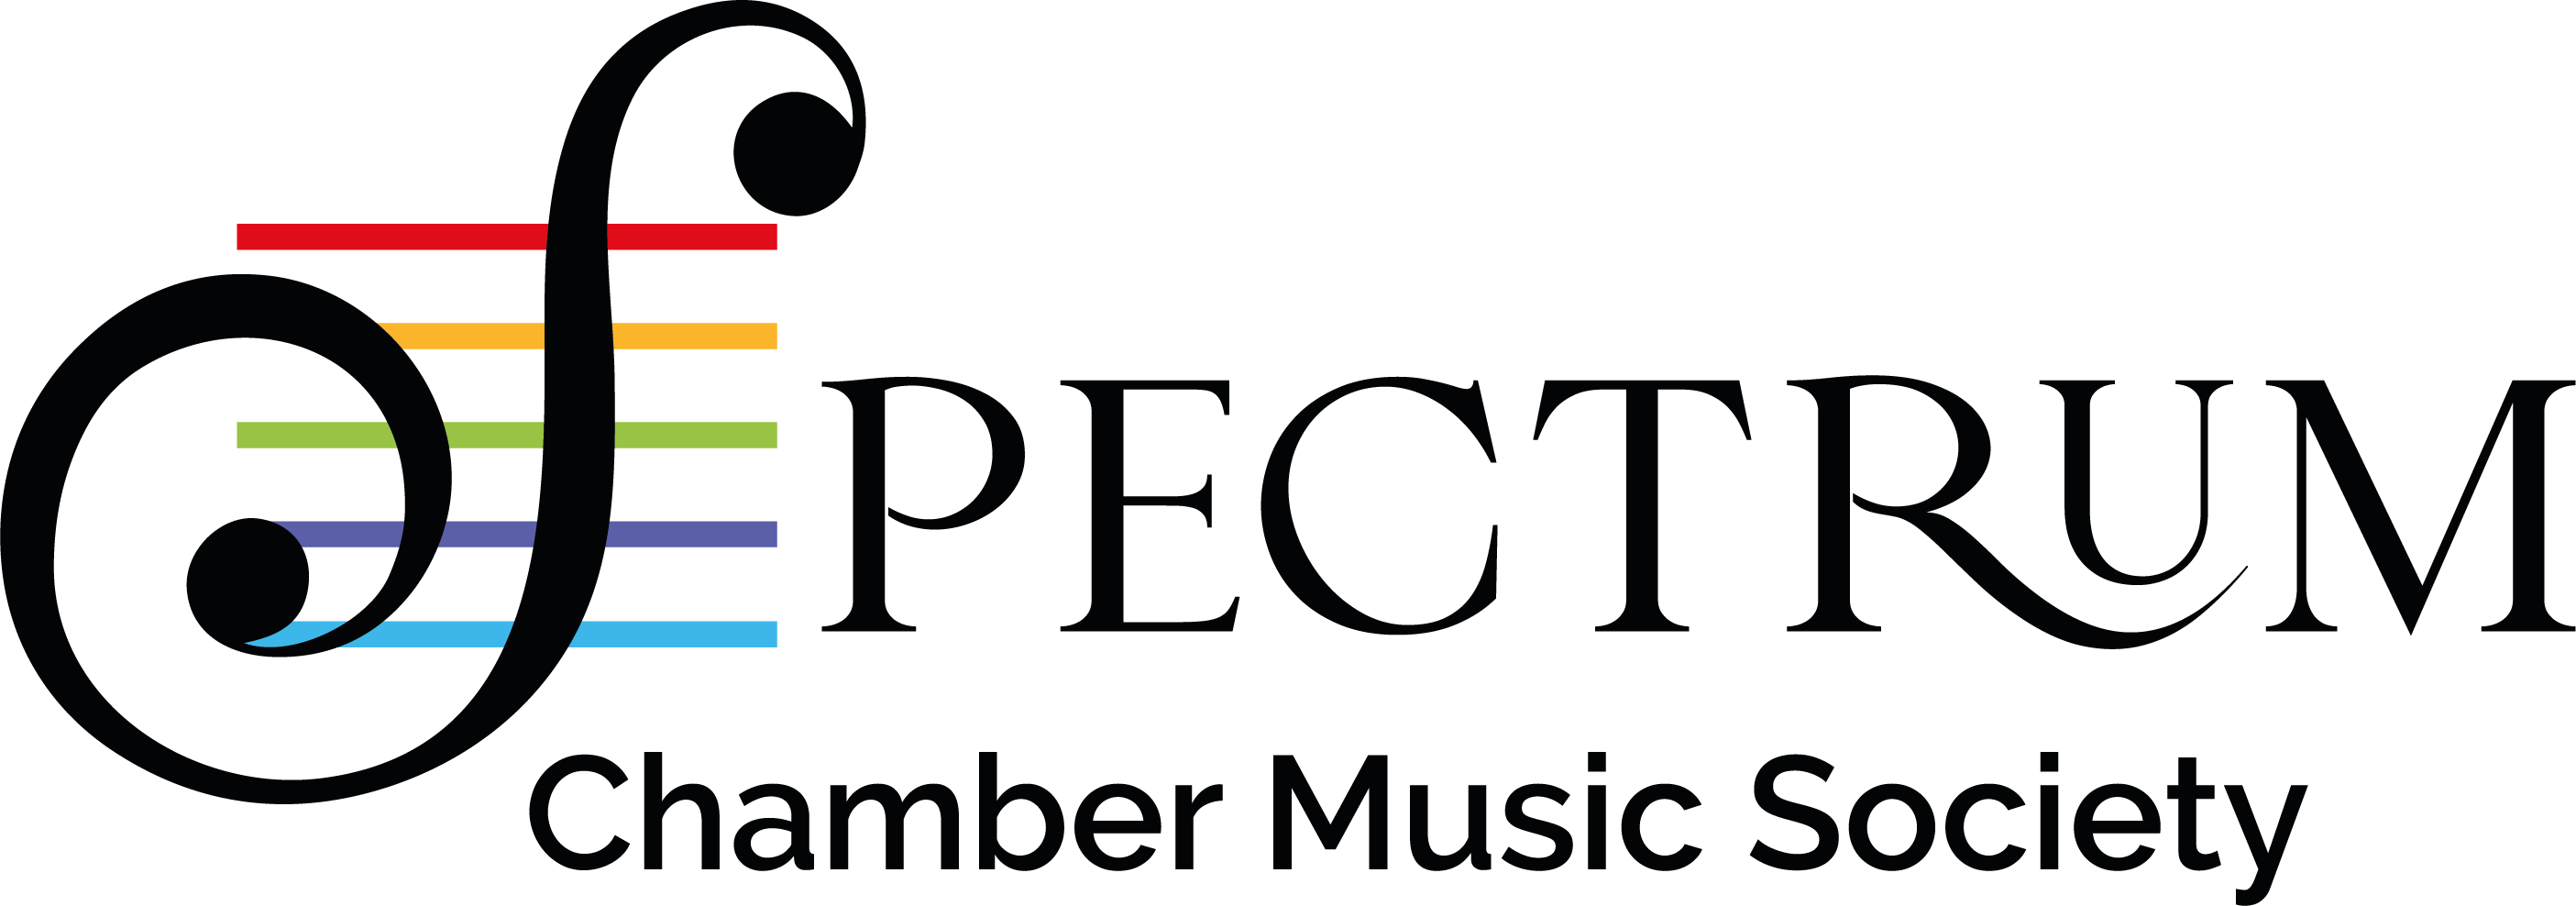 Spectrum Chamber Music Society